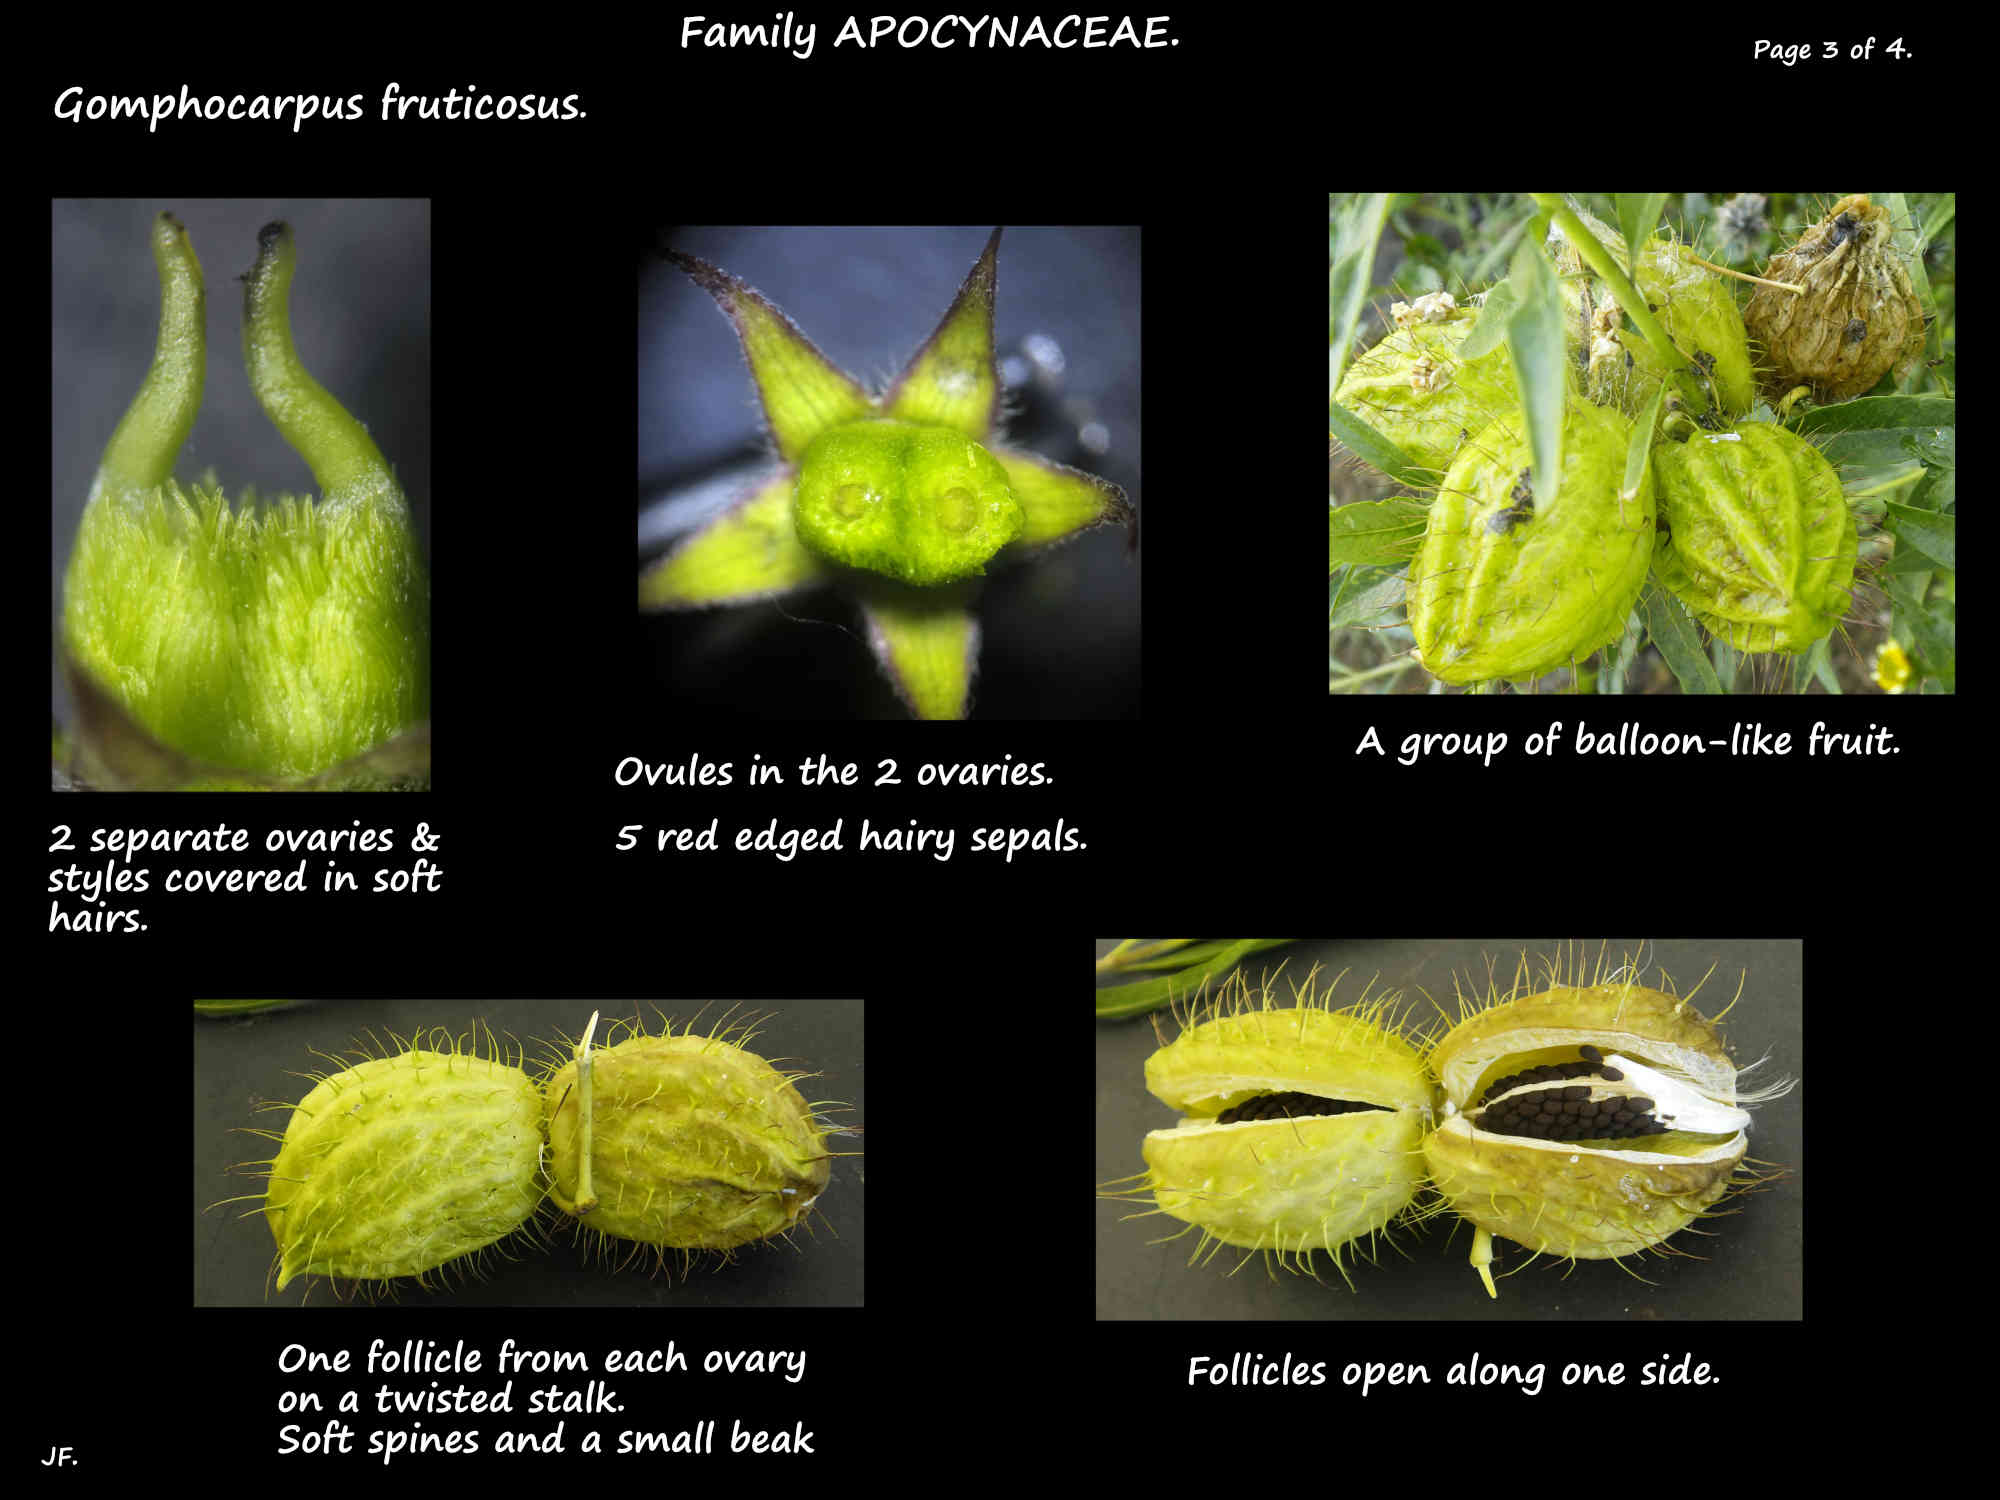 13 Gomphocarpus fruticosa ovaries, styles and follicles